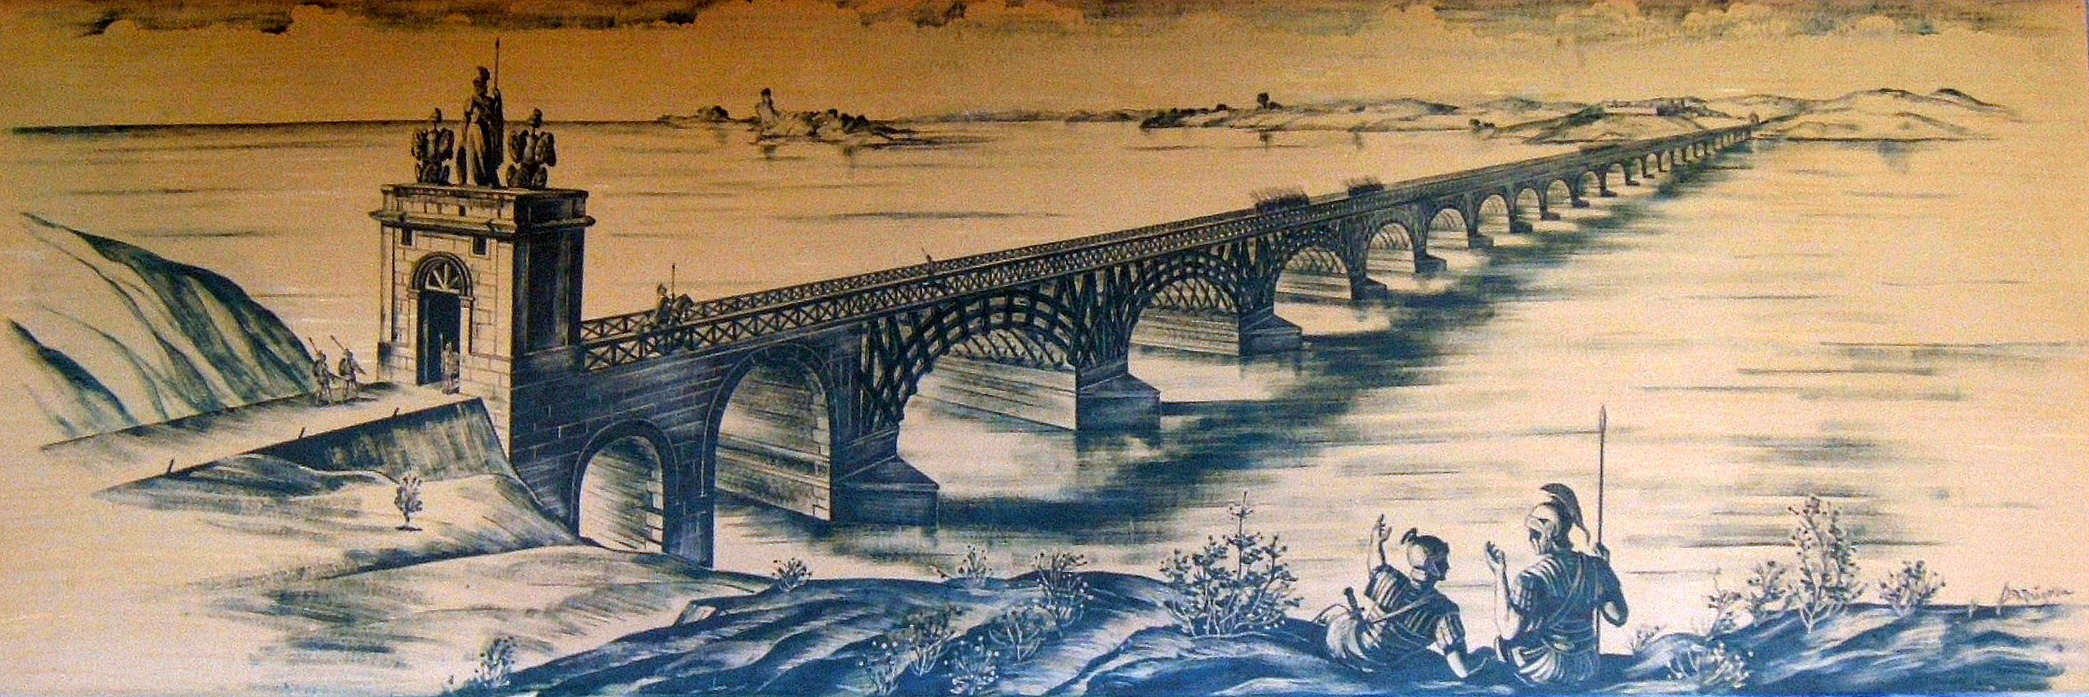 trajans-bridge-across-the-danube-modern-reconstruction